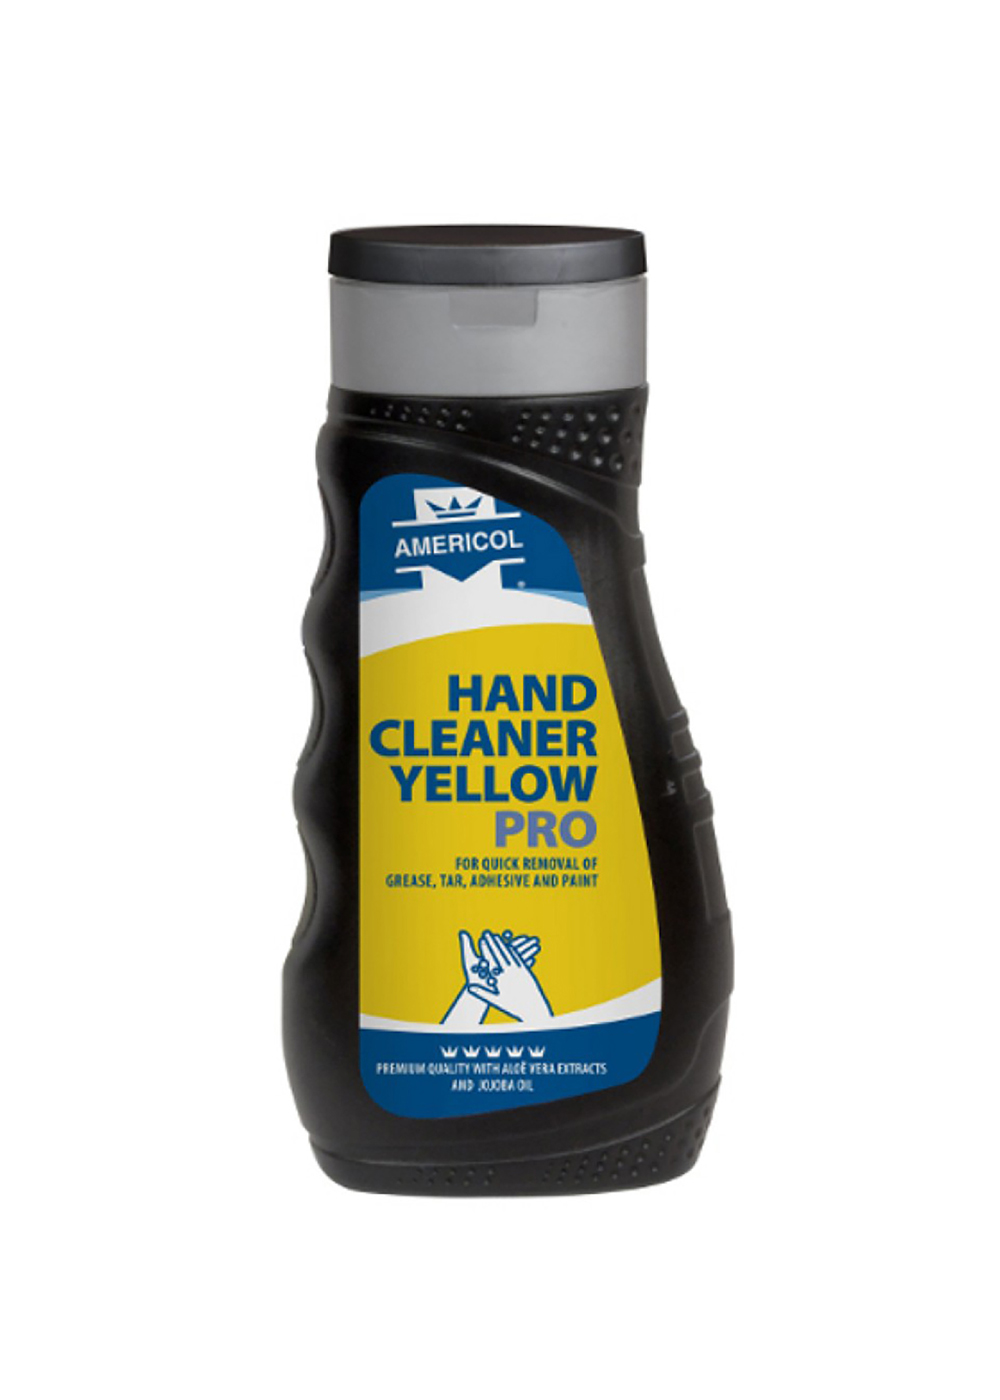 AMERICOL hand cleaner Yellow Pro